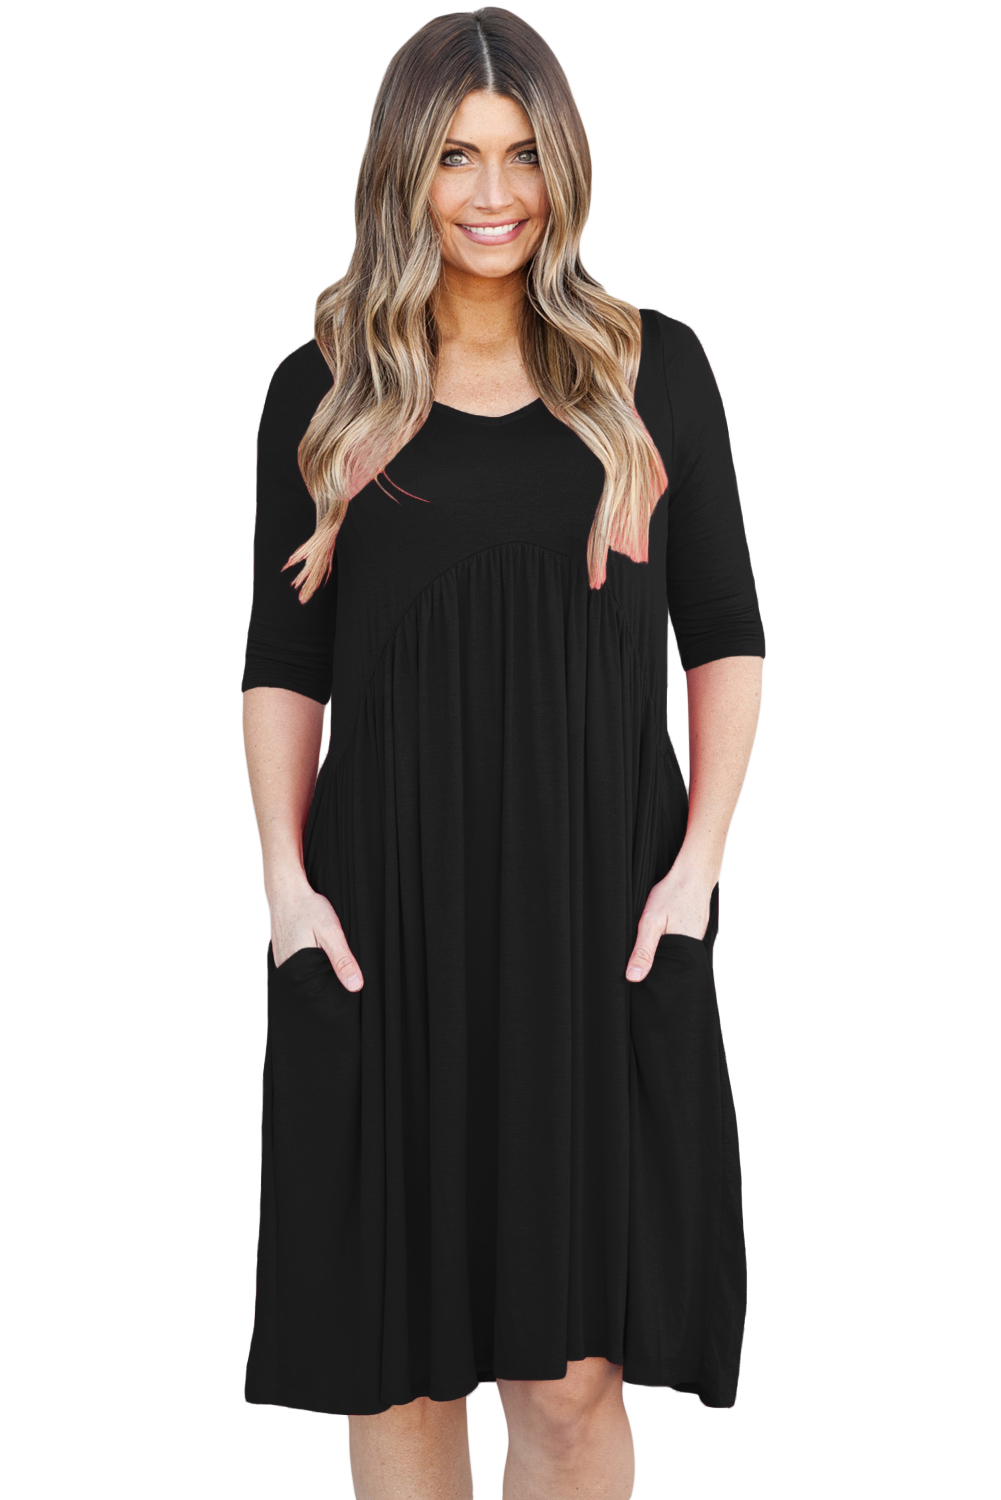 BY61653-2 Black 3 Sleeve Draped Swing Dress